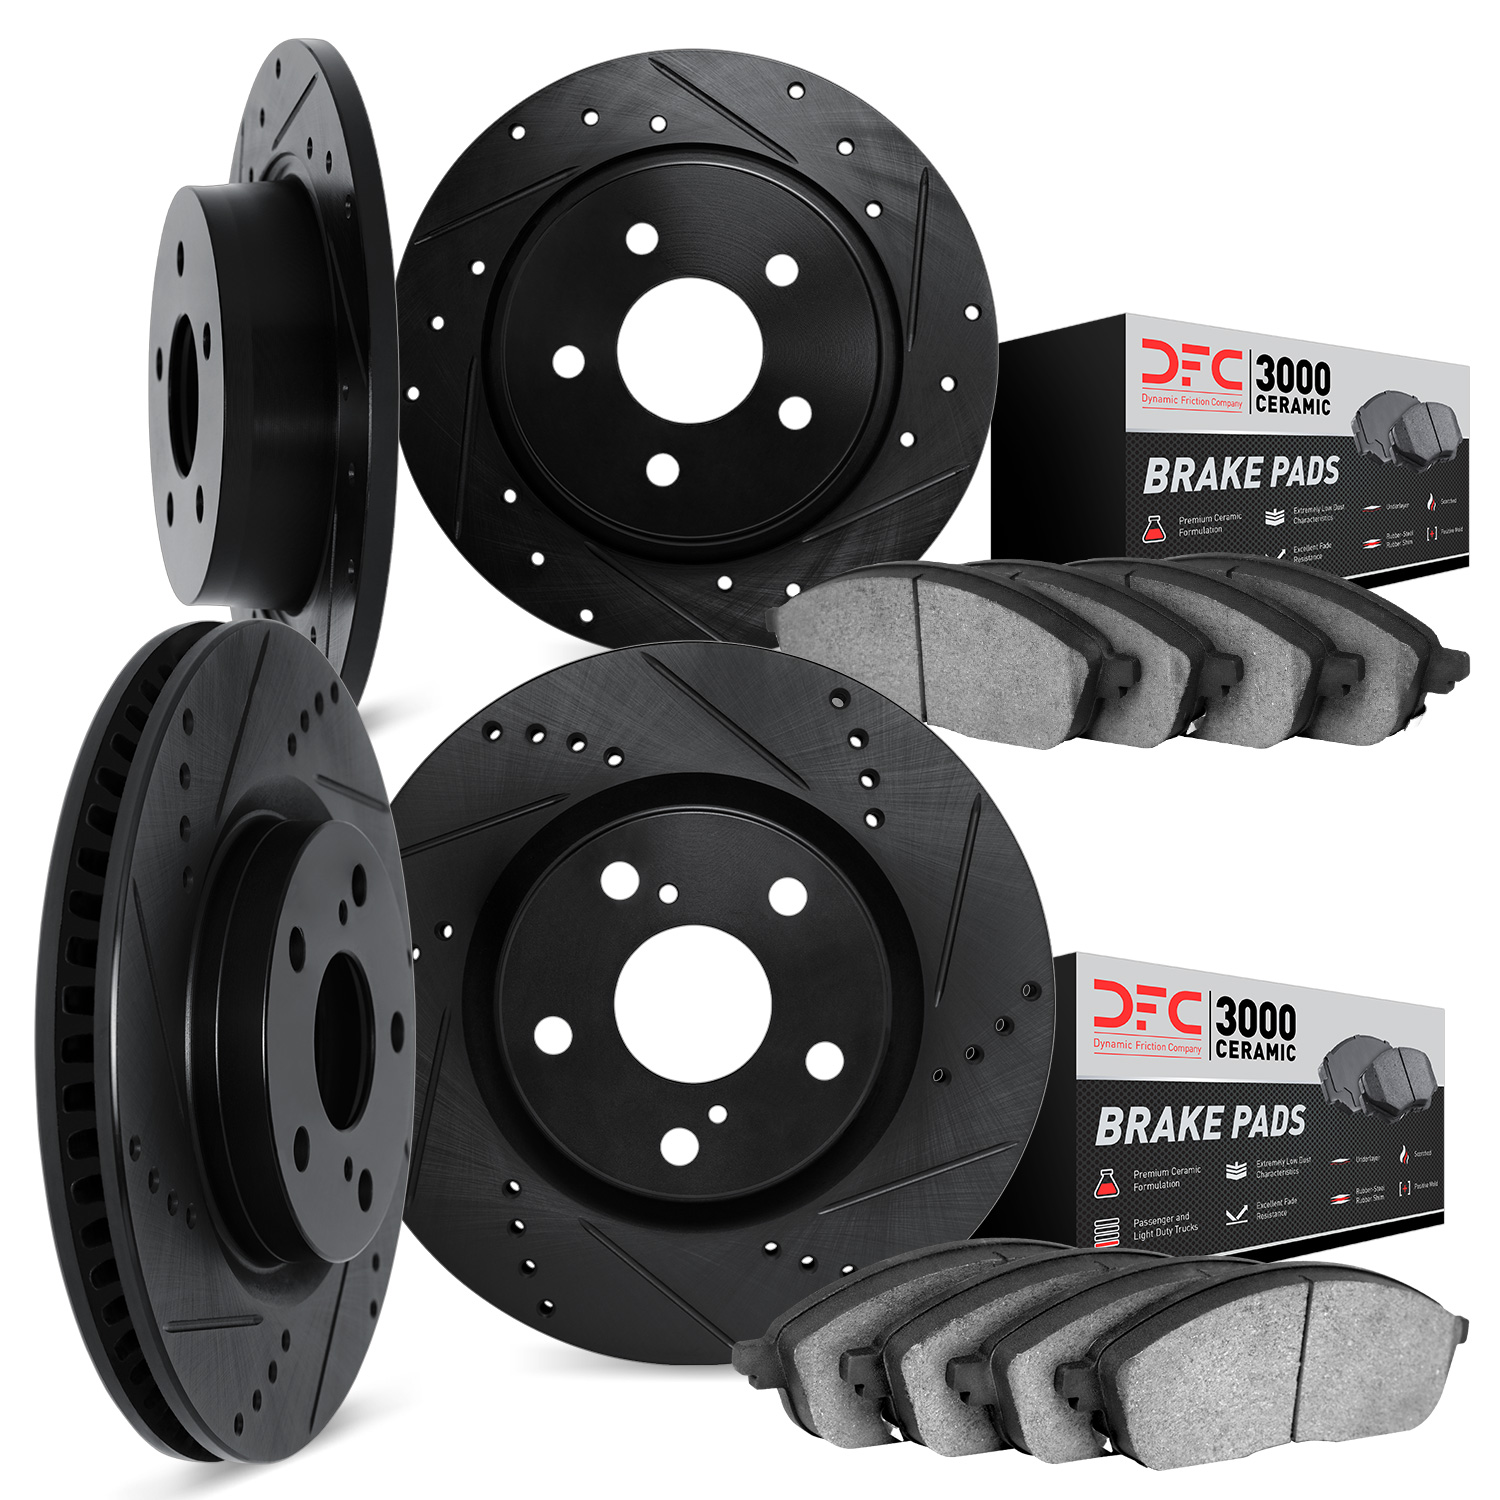 8304-76078 Drilled/Slotted Brake Rotors with 3000-Series Ceramic Brake Pads Kit [Black], 2009-2019 Multiple Makes/Models, Positi